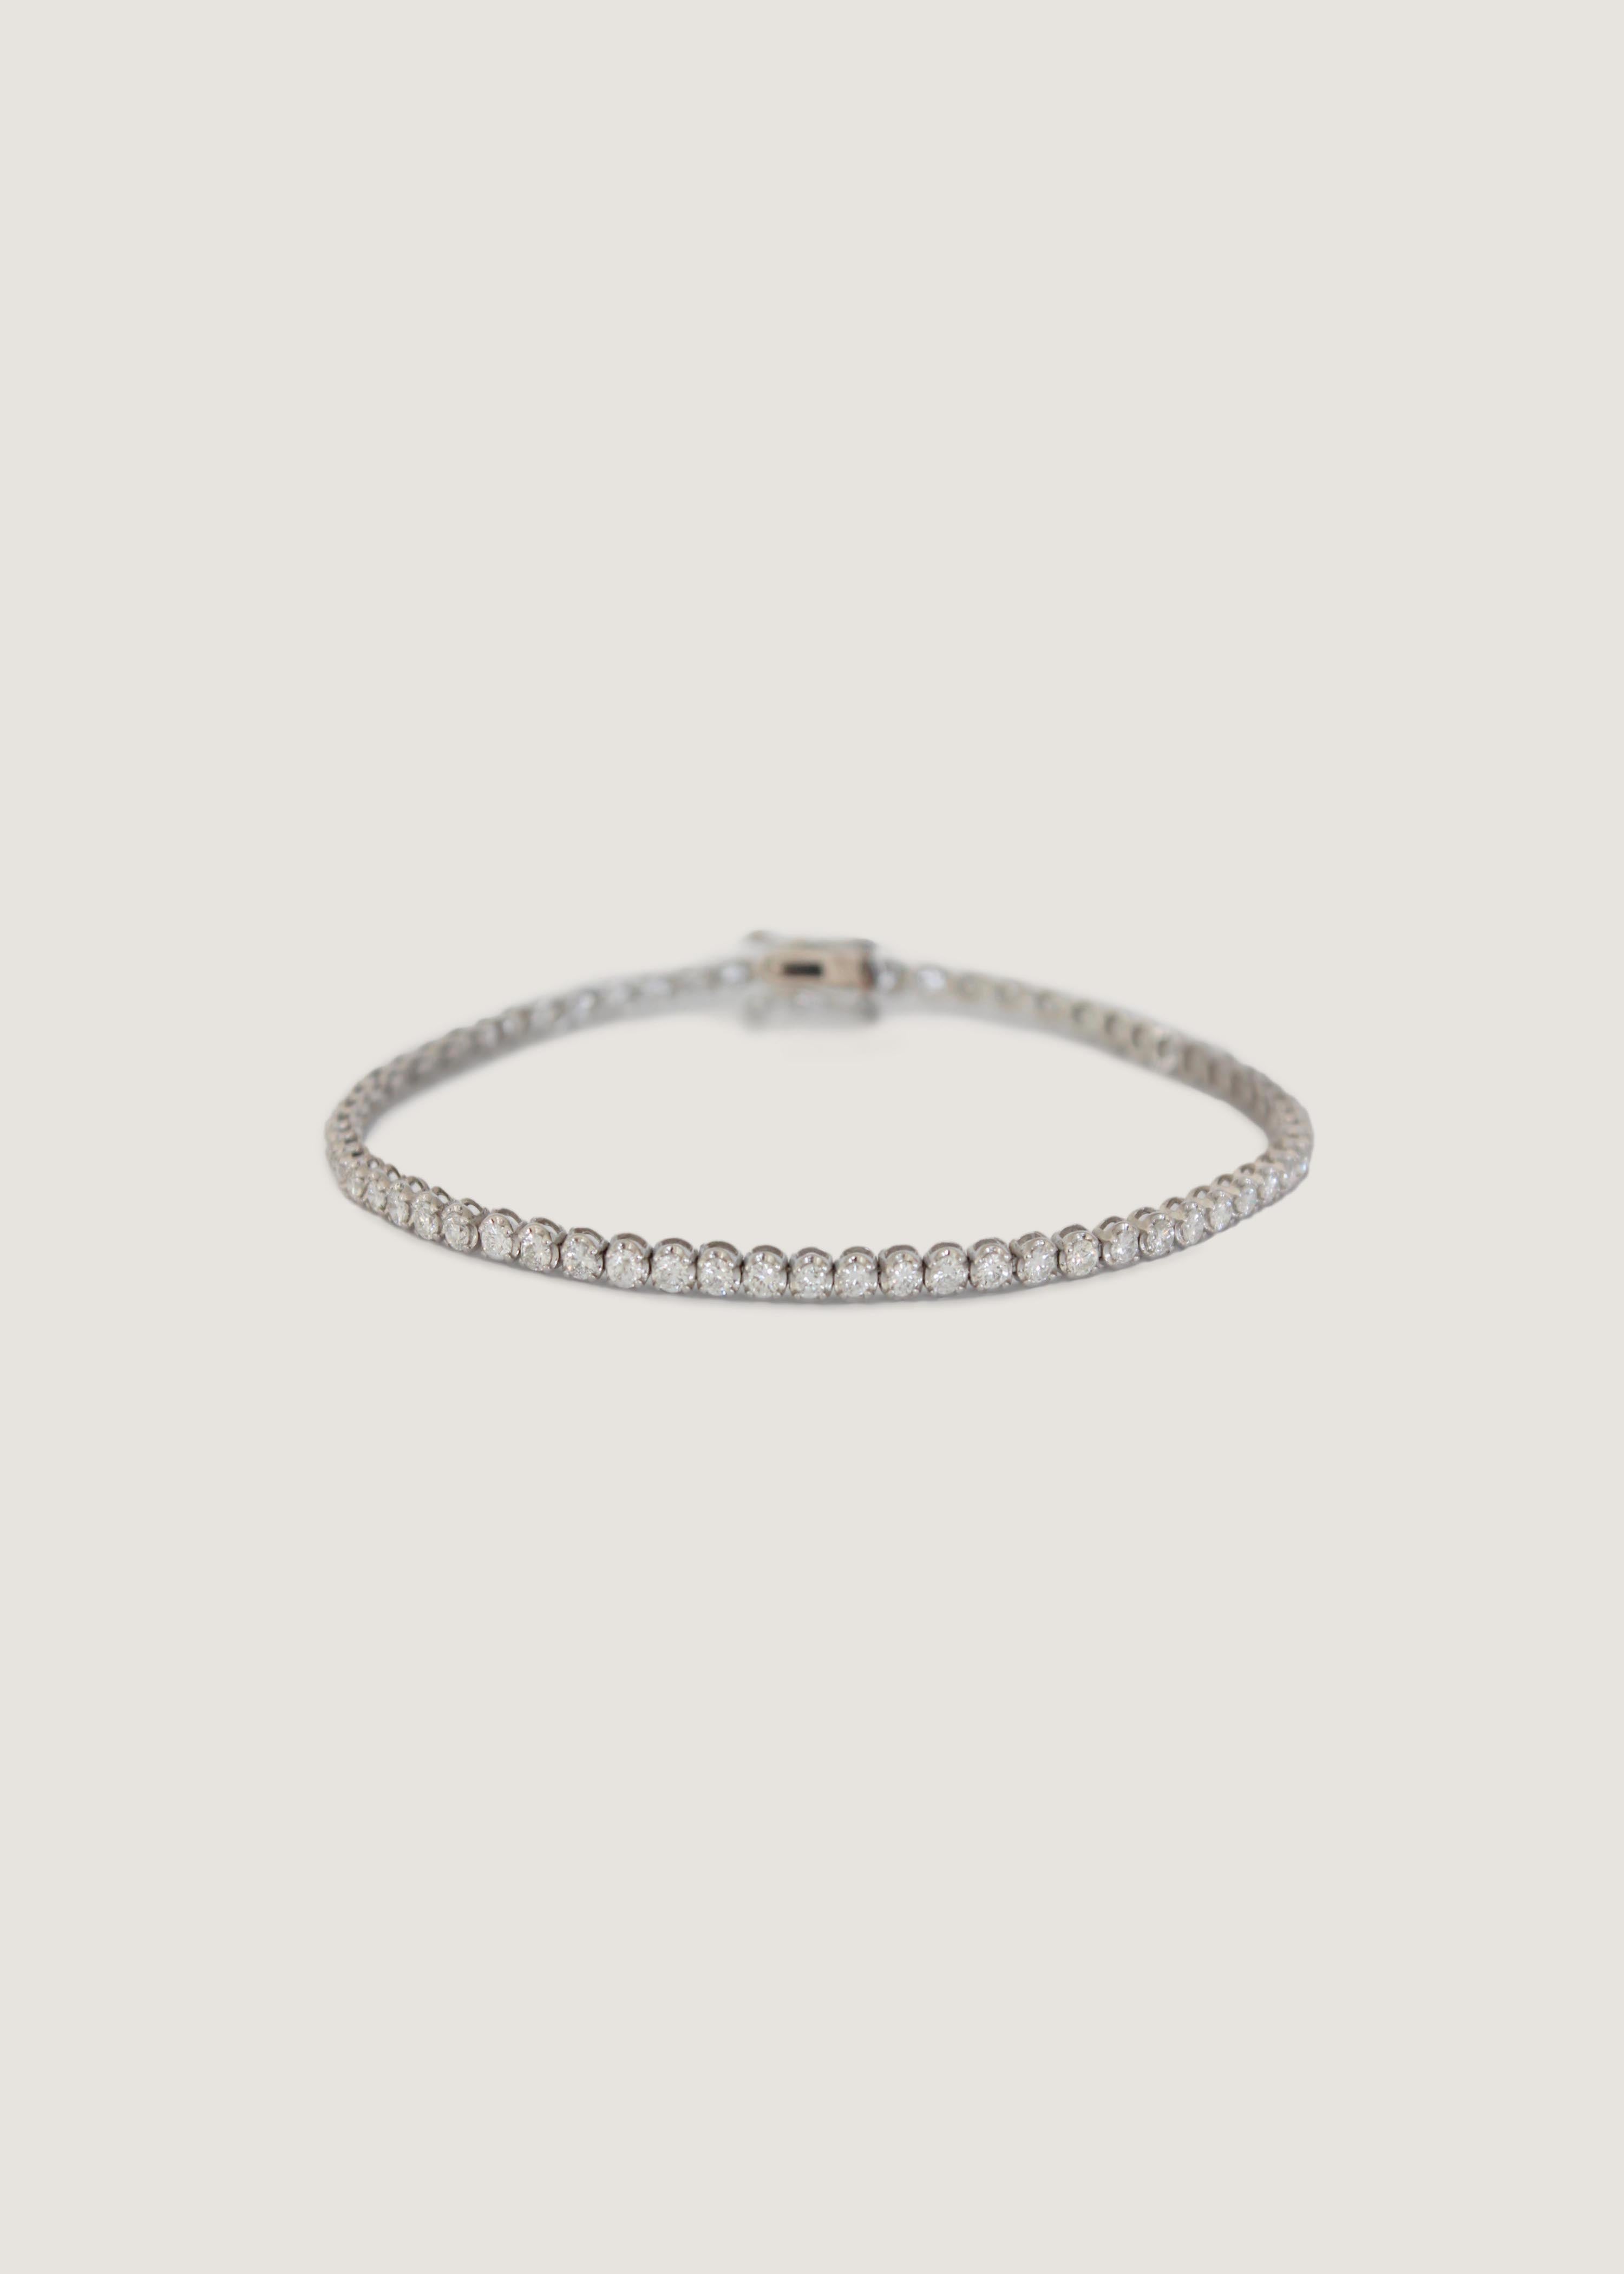 alt="Madison Diamond Tennis Bracelet white gold"